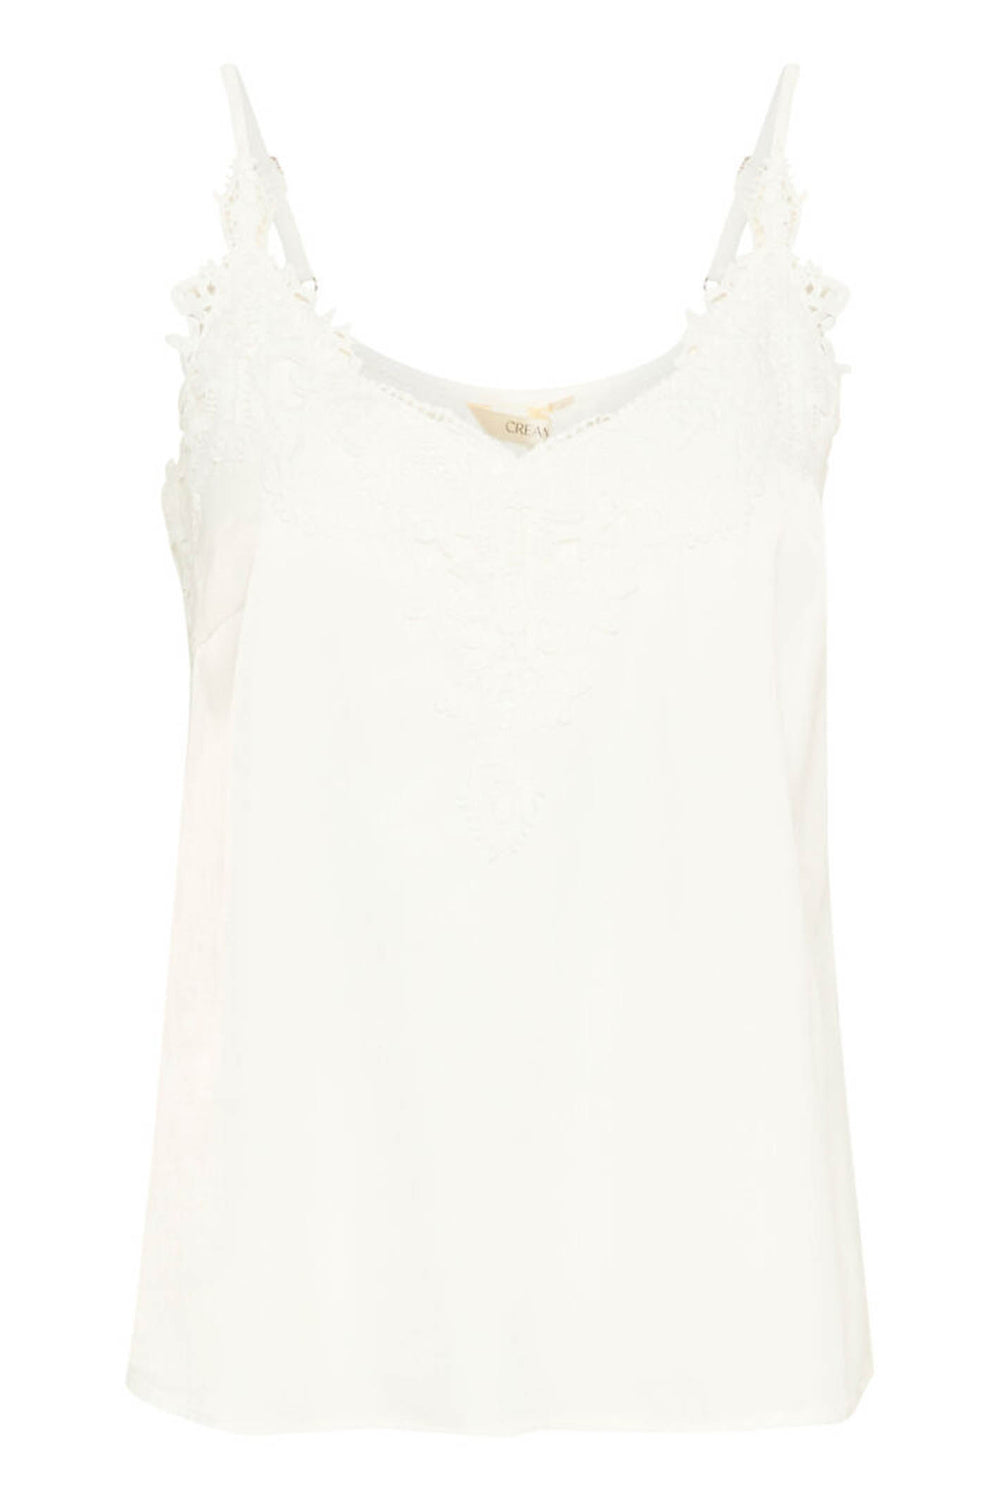 Cream CRanna snow white camisole lace top with straps dotique boutique chesterfield 1 2